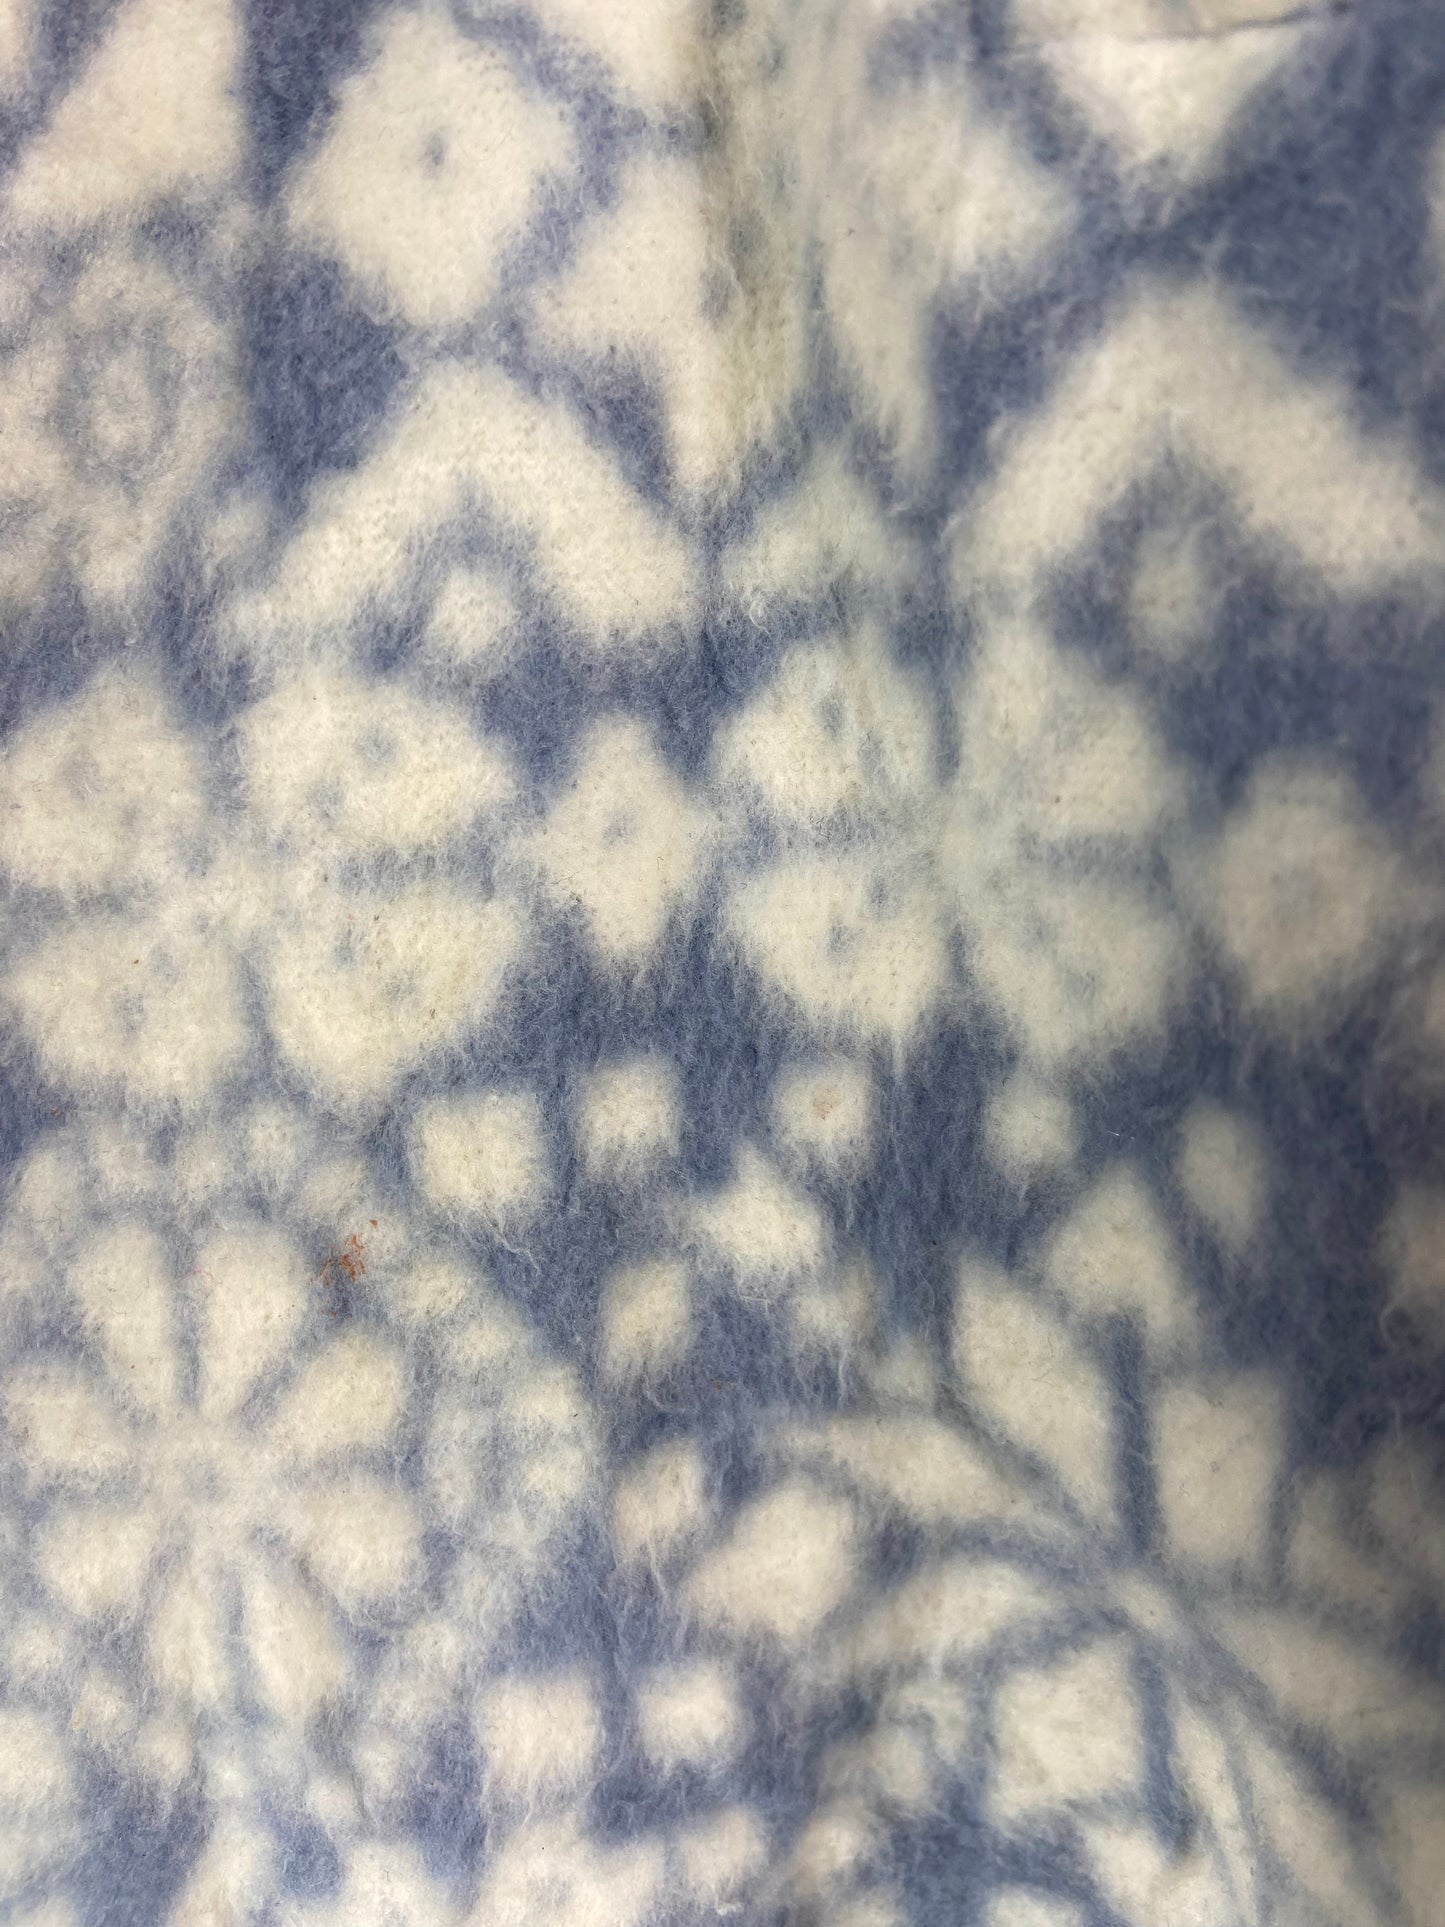 VTG Catalina Winter Pattern Fleece Sweater Sz M